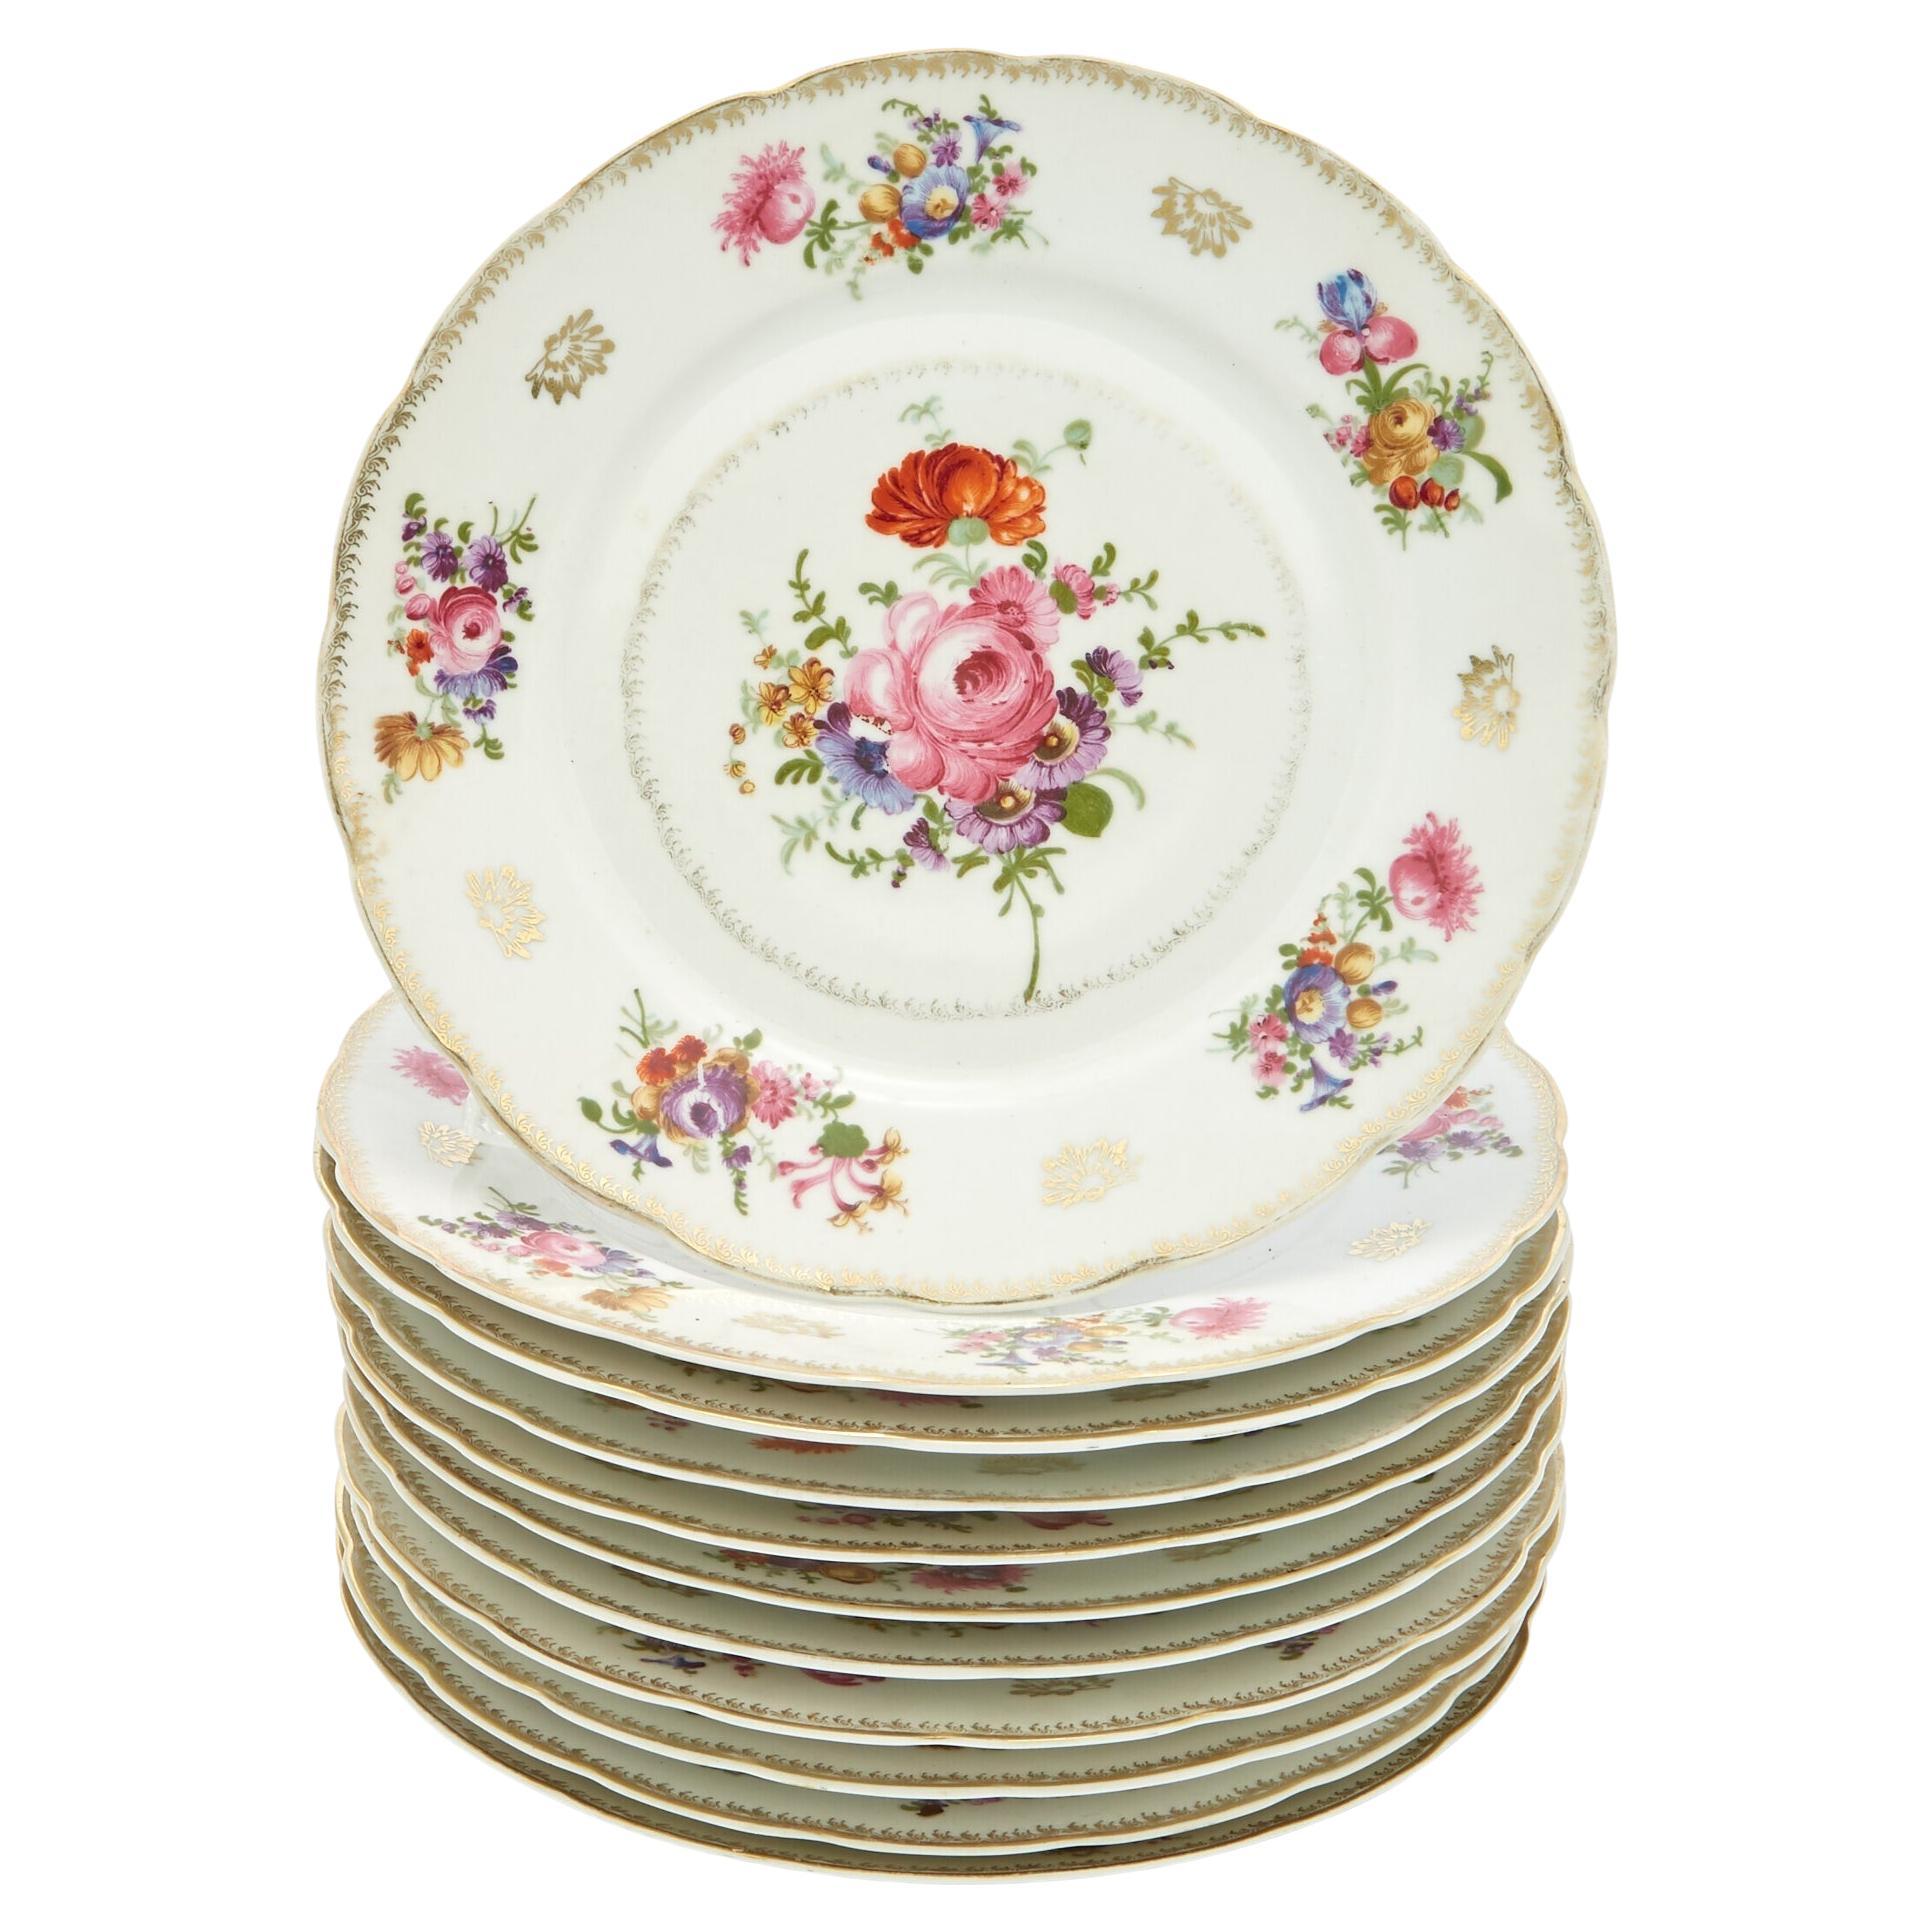 Porcelain Transfer Decorate / Gilt  Dinner Service Plate For 11 People For Sale